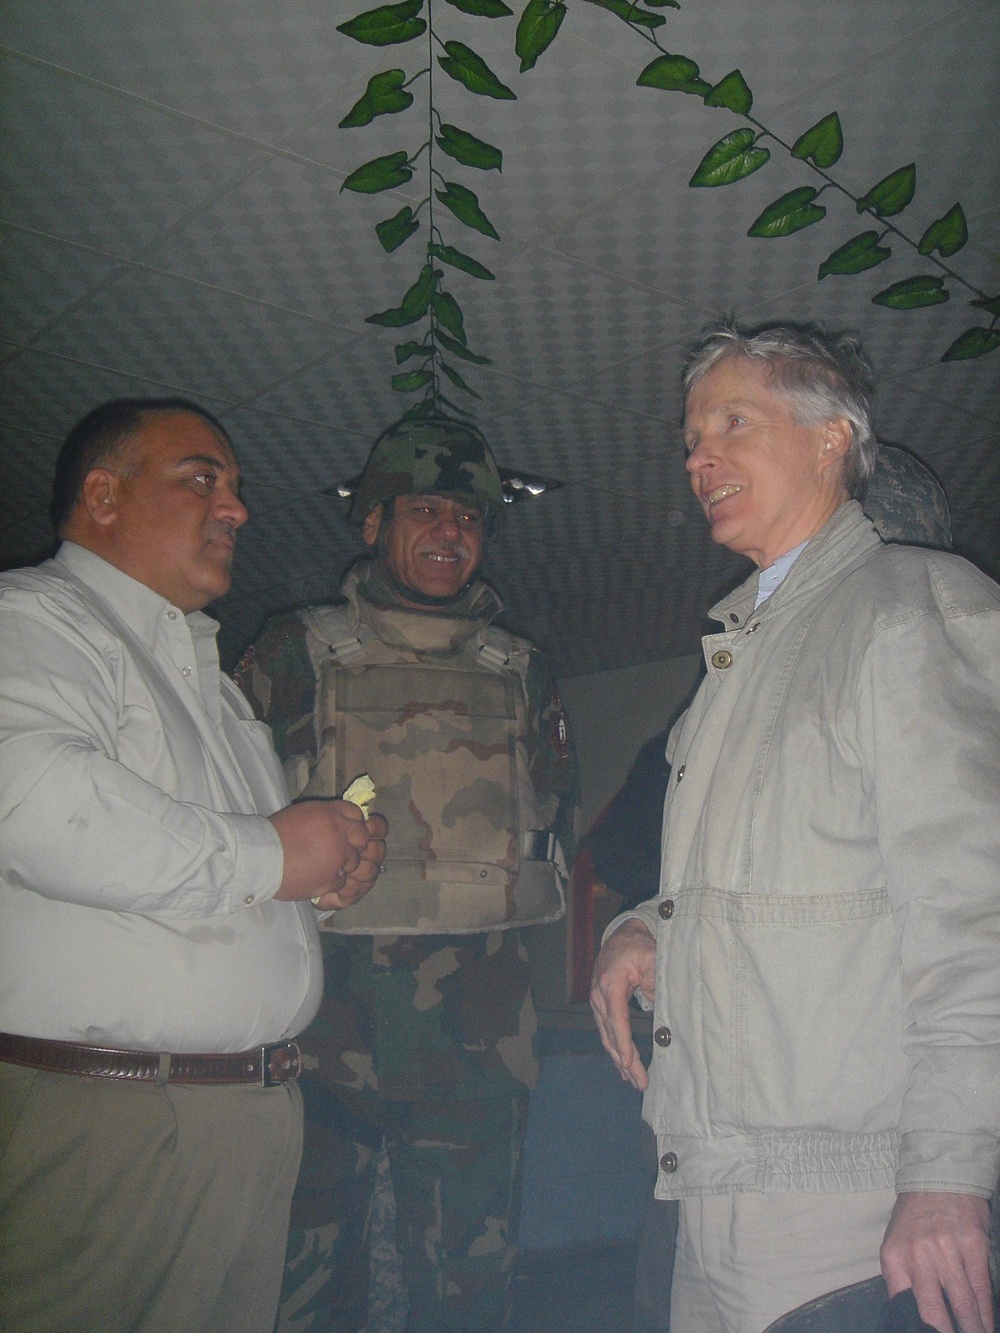 Ambassador Crocker Baghdad Walking Tour